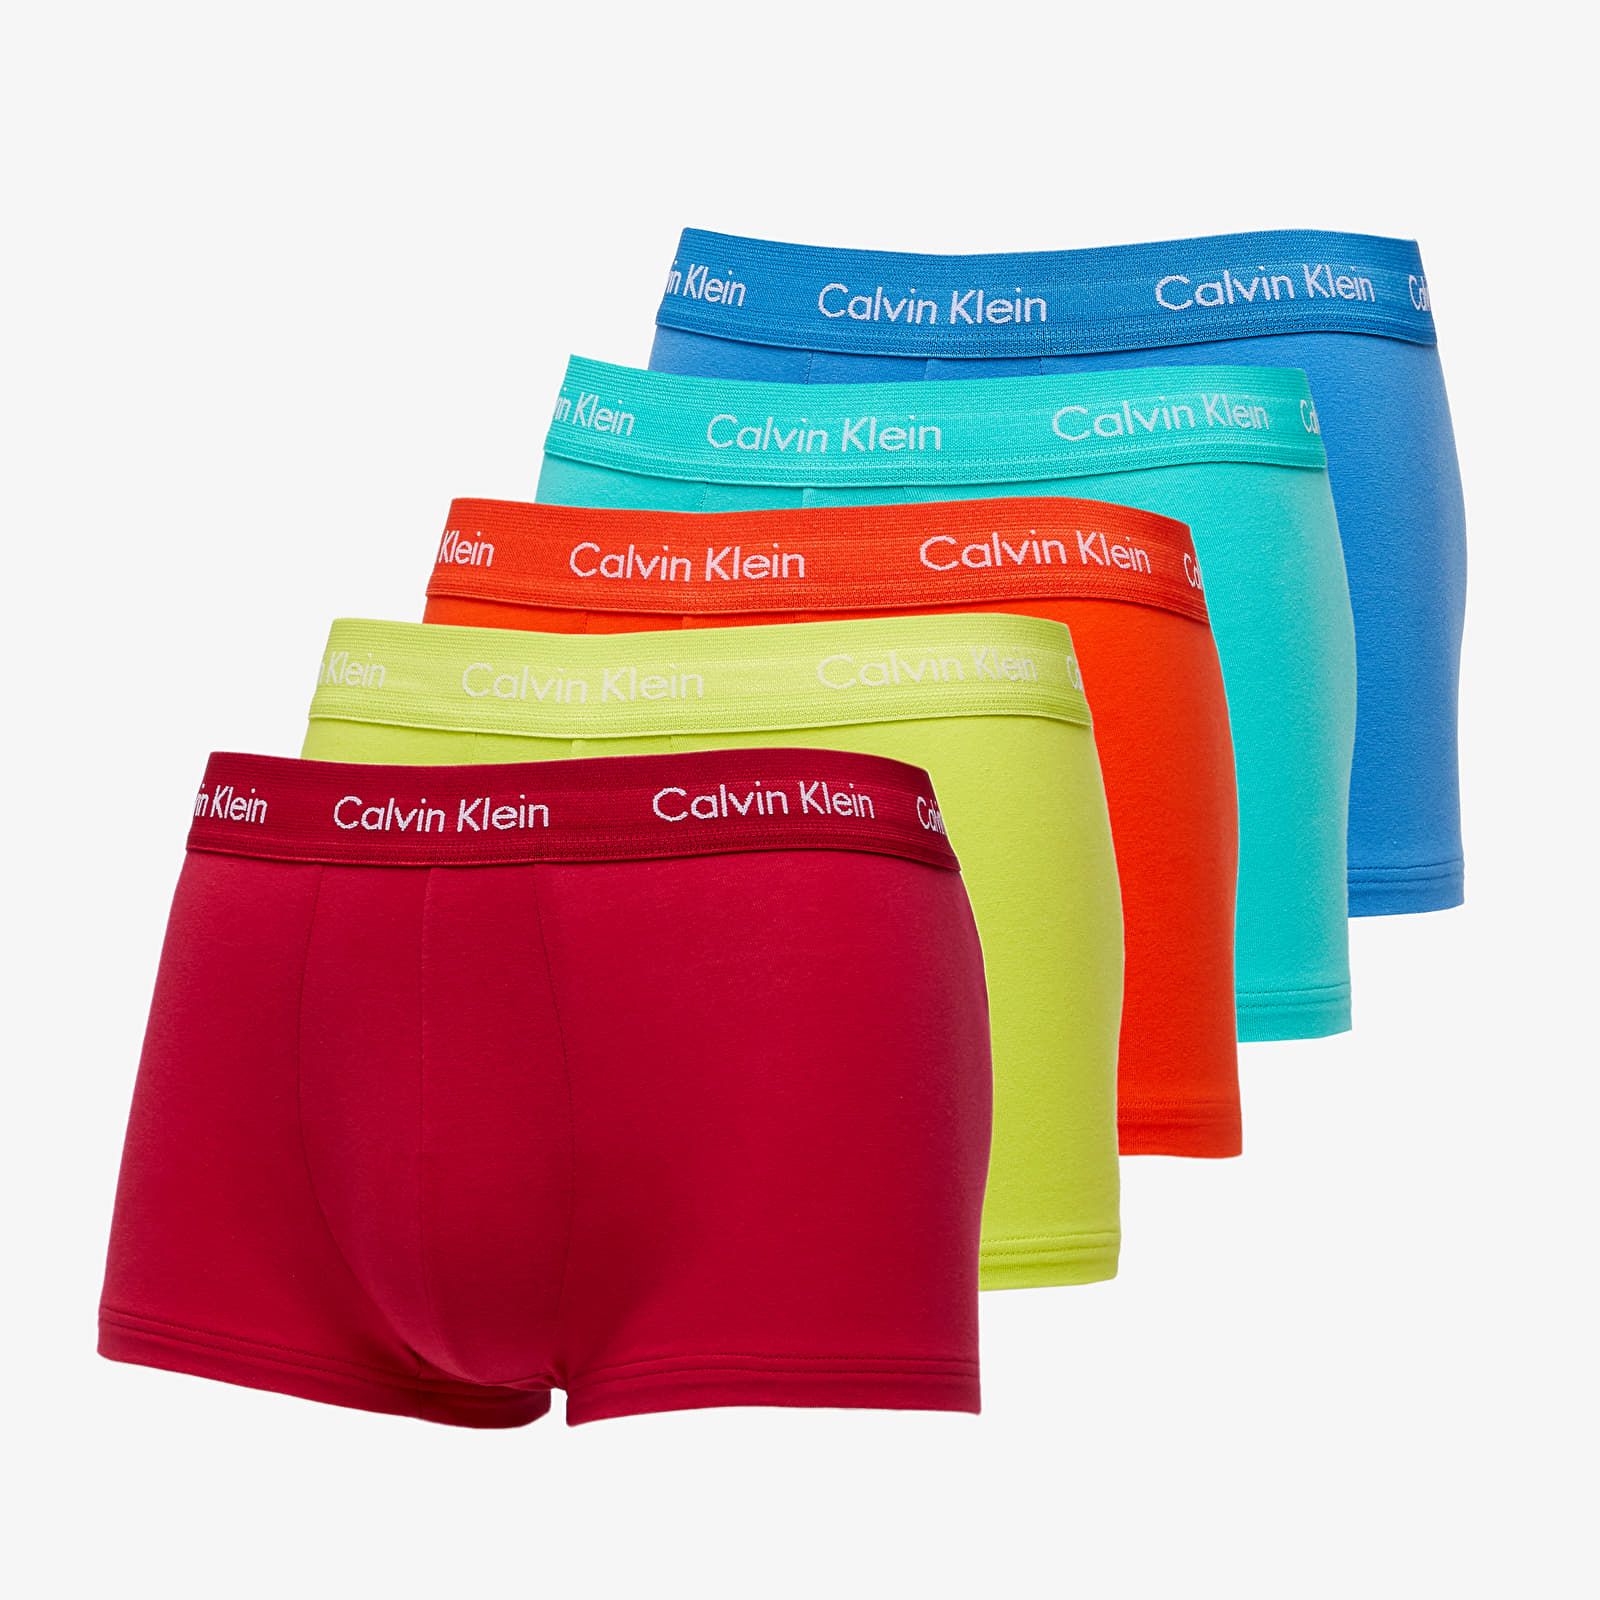 Boxer shorts Calvin Klein The Pride Edit Low Rise Trunk 5 Pack Orange/  Burgundy/ Yellow/ Light Green/ Blue Sky